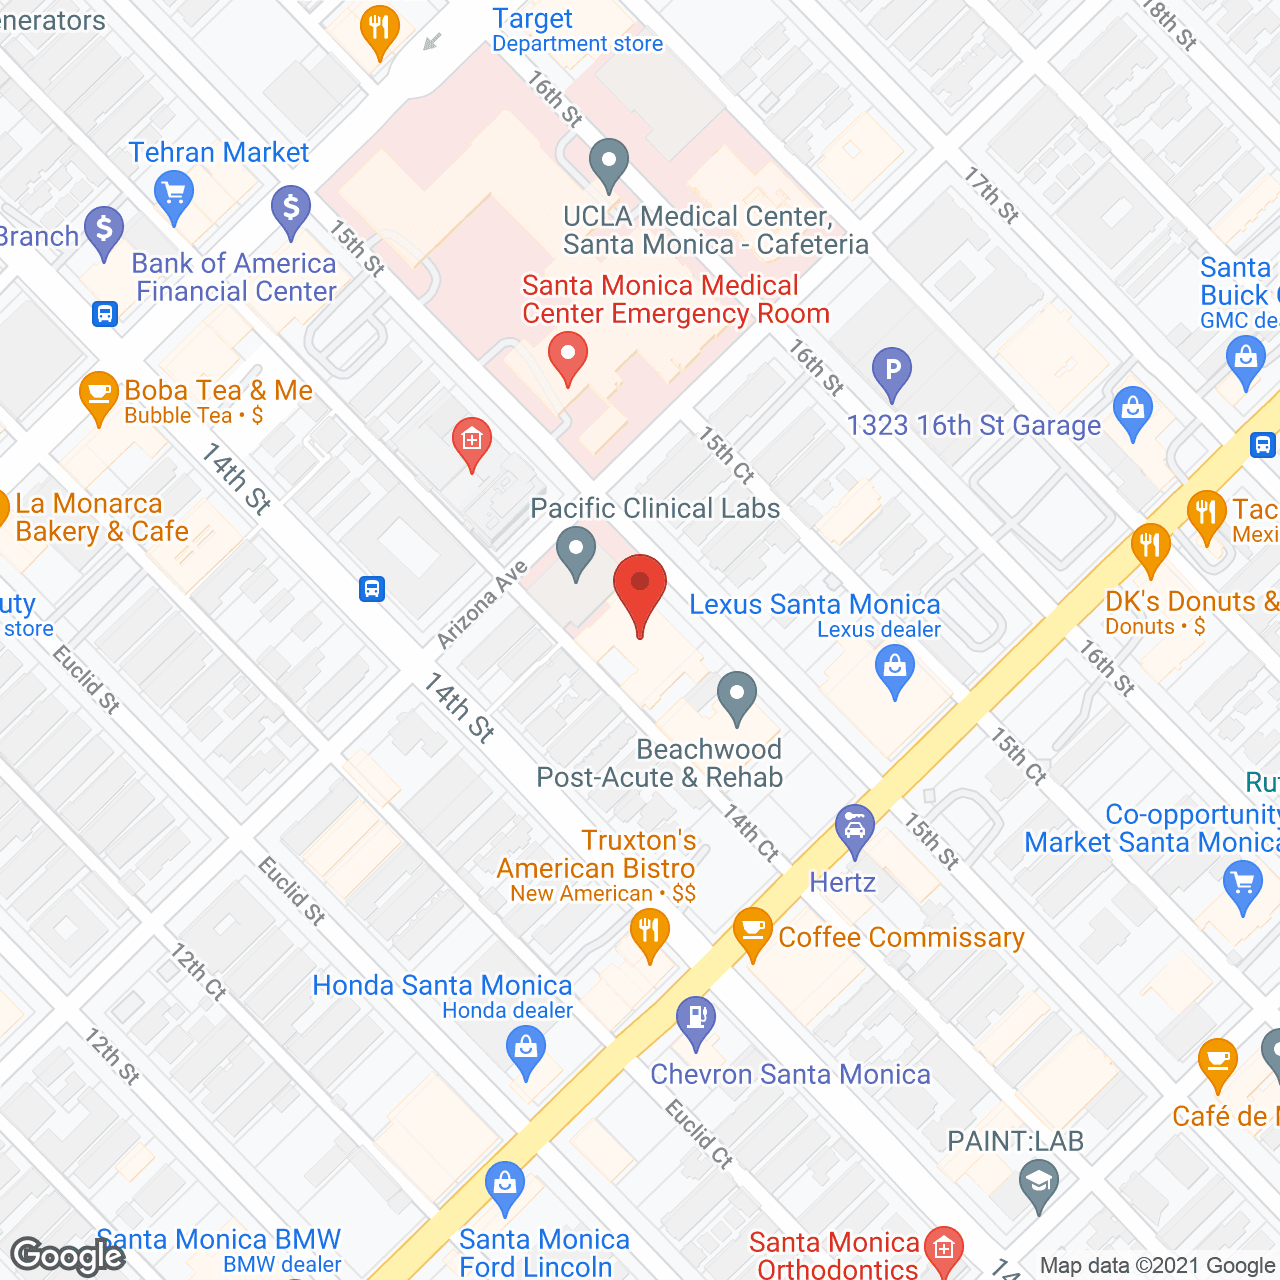 Ivy Park at Santa Monica in google map